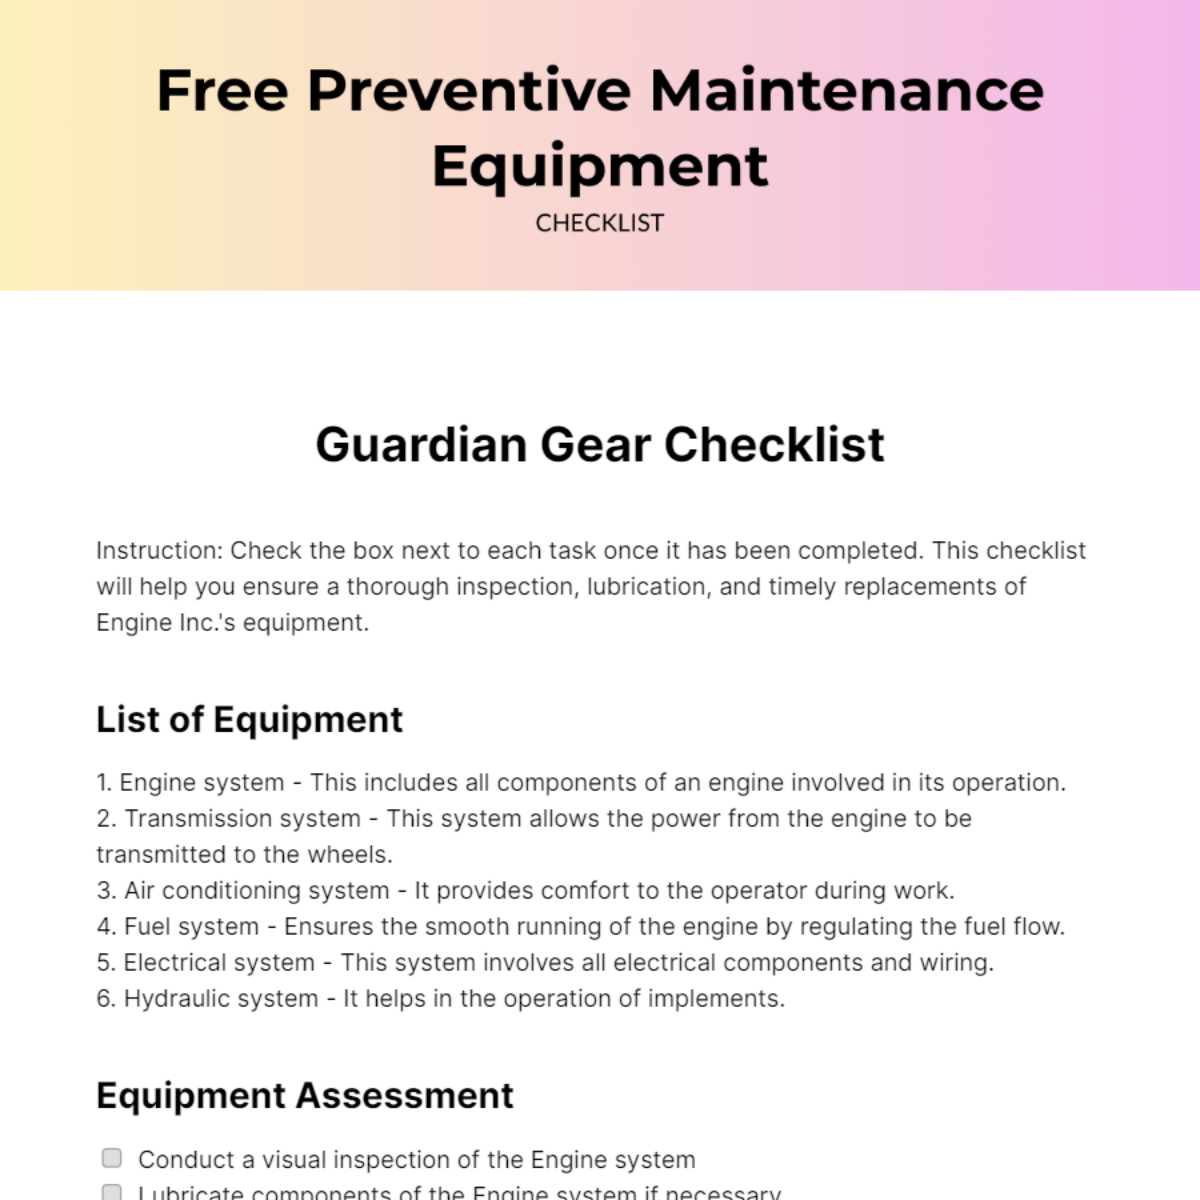 Preventive Maintenance Equipment Checklist Template